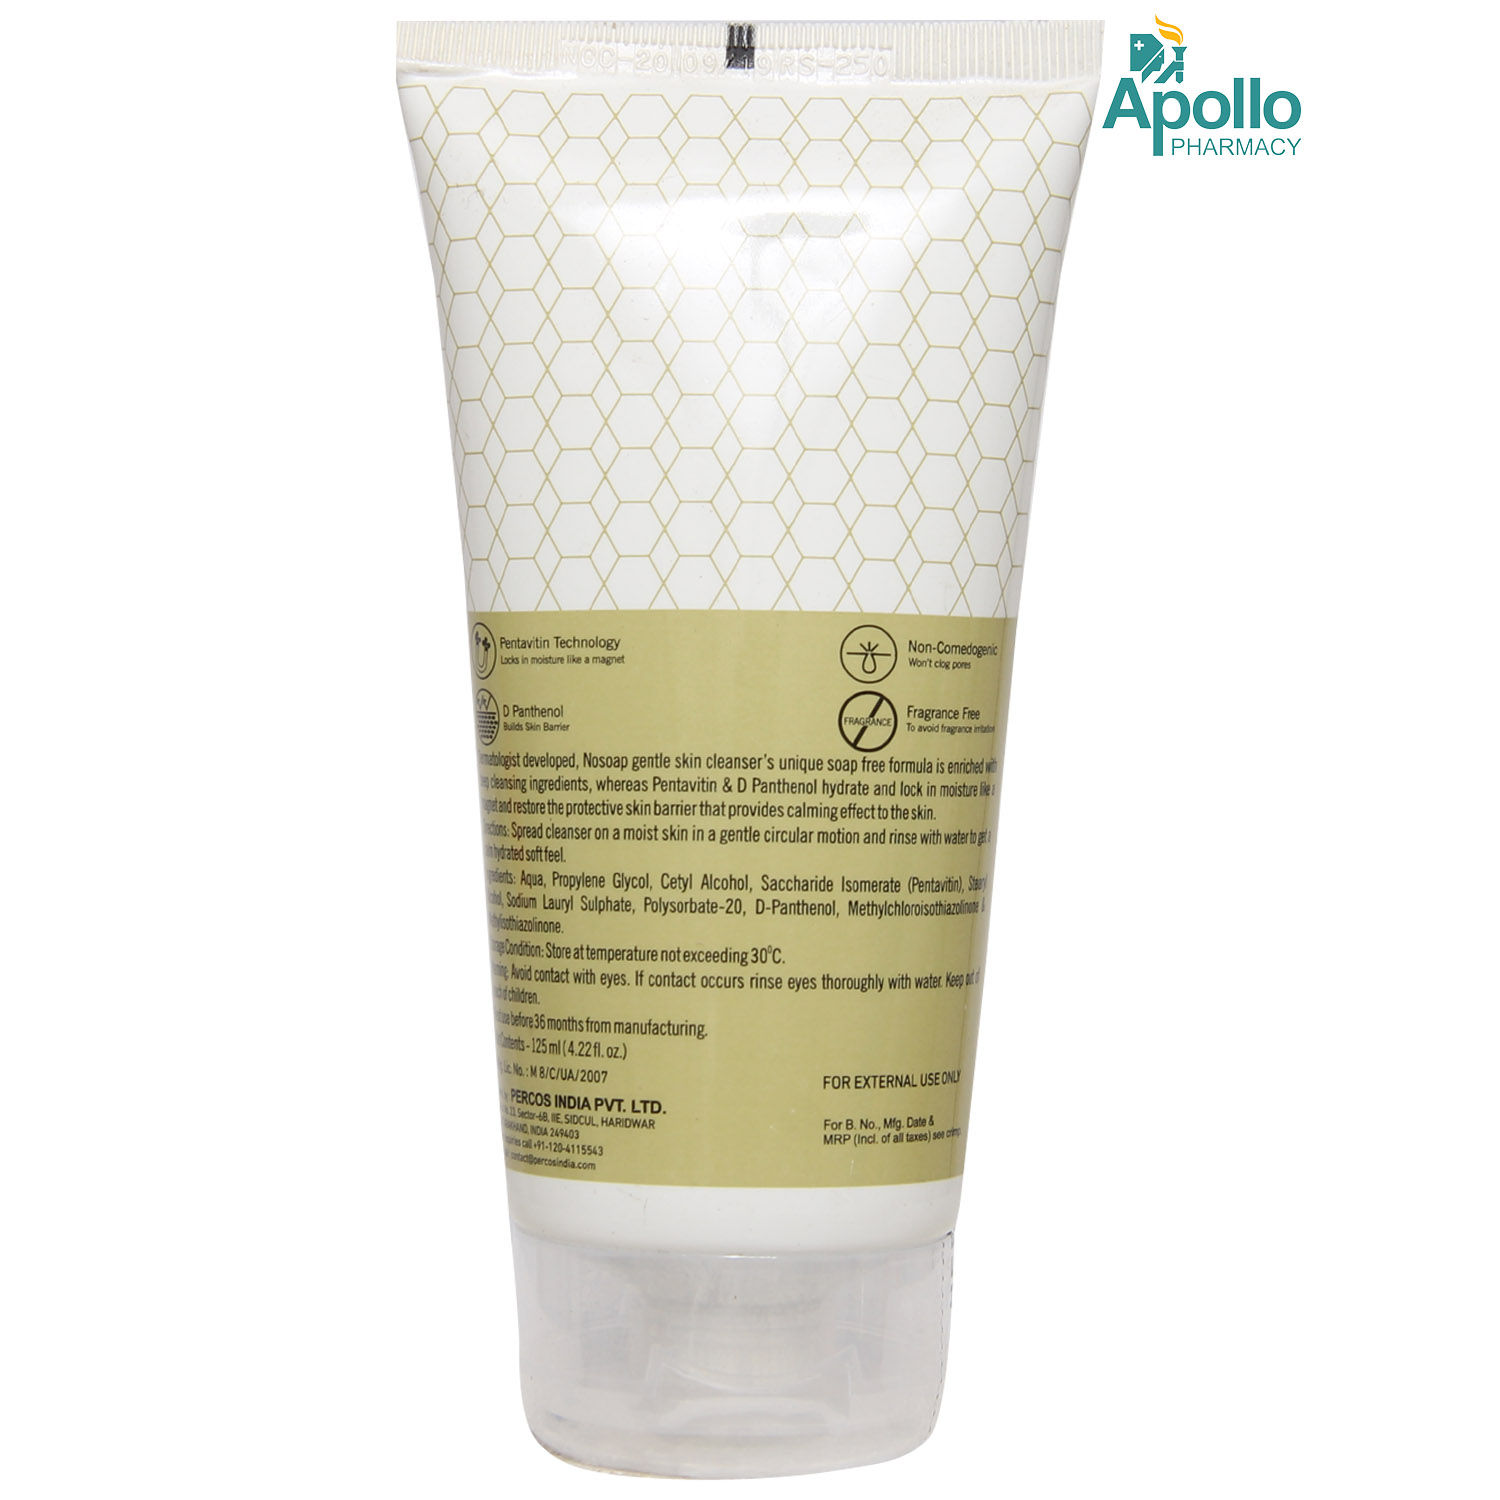 Nosoap Gentle Skin Cleanser 125 ml, Pack of 1 